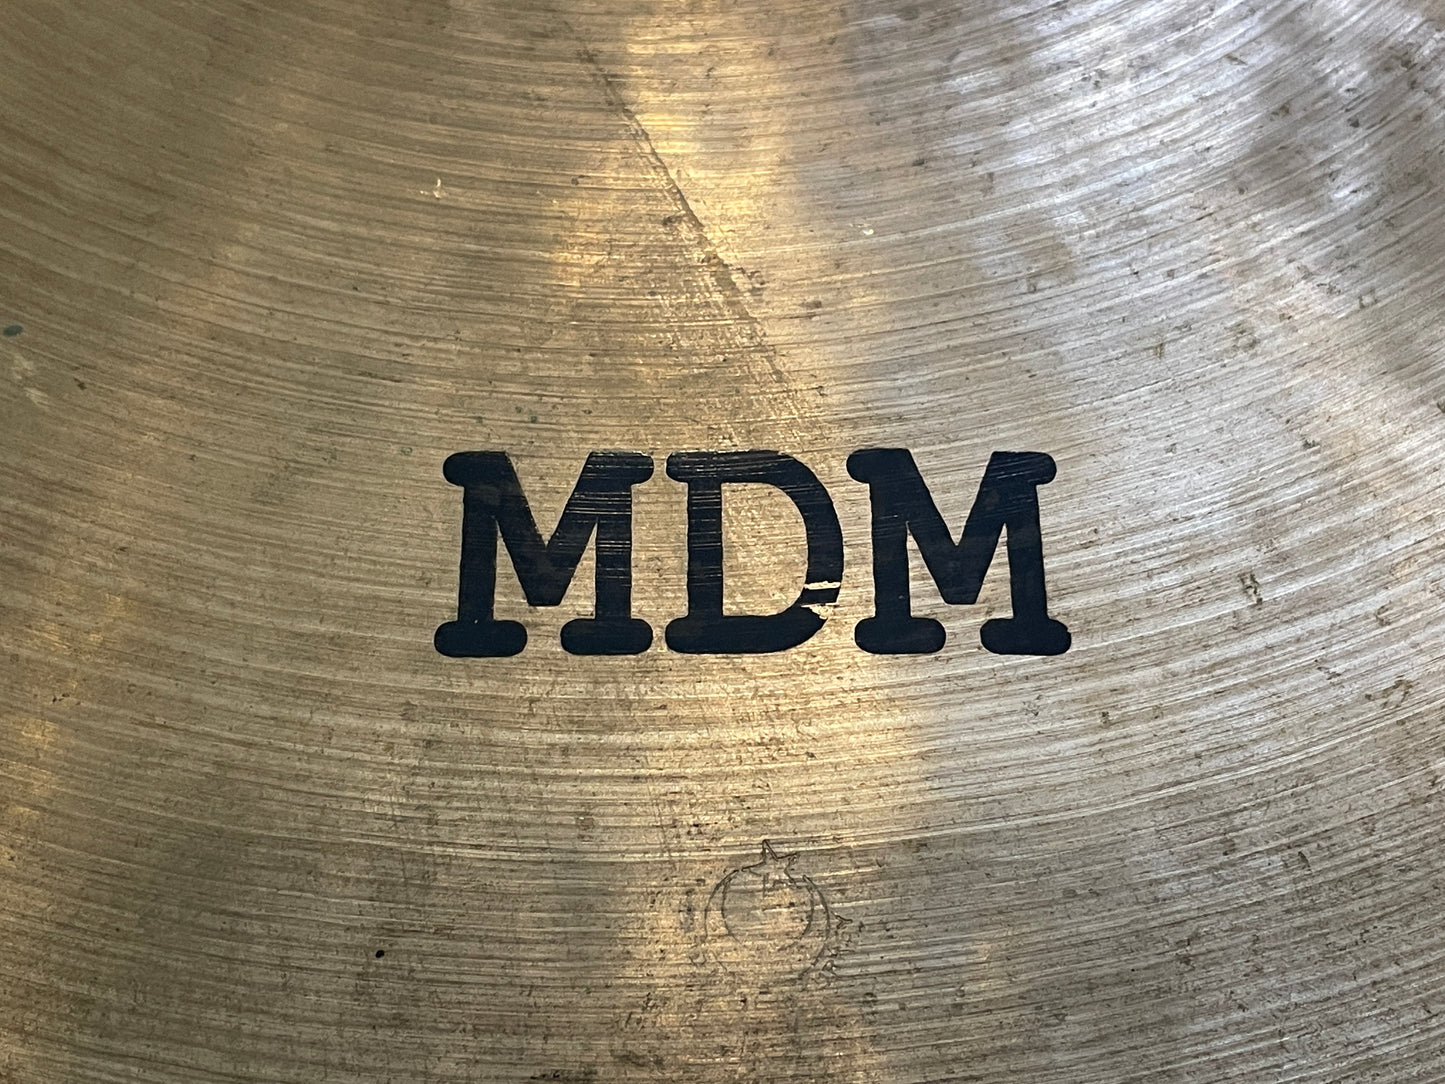 20" TRX MDM Ride Cymbal 2466g